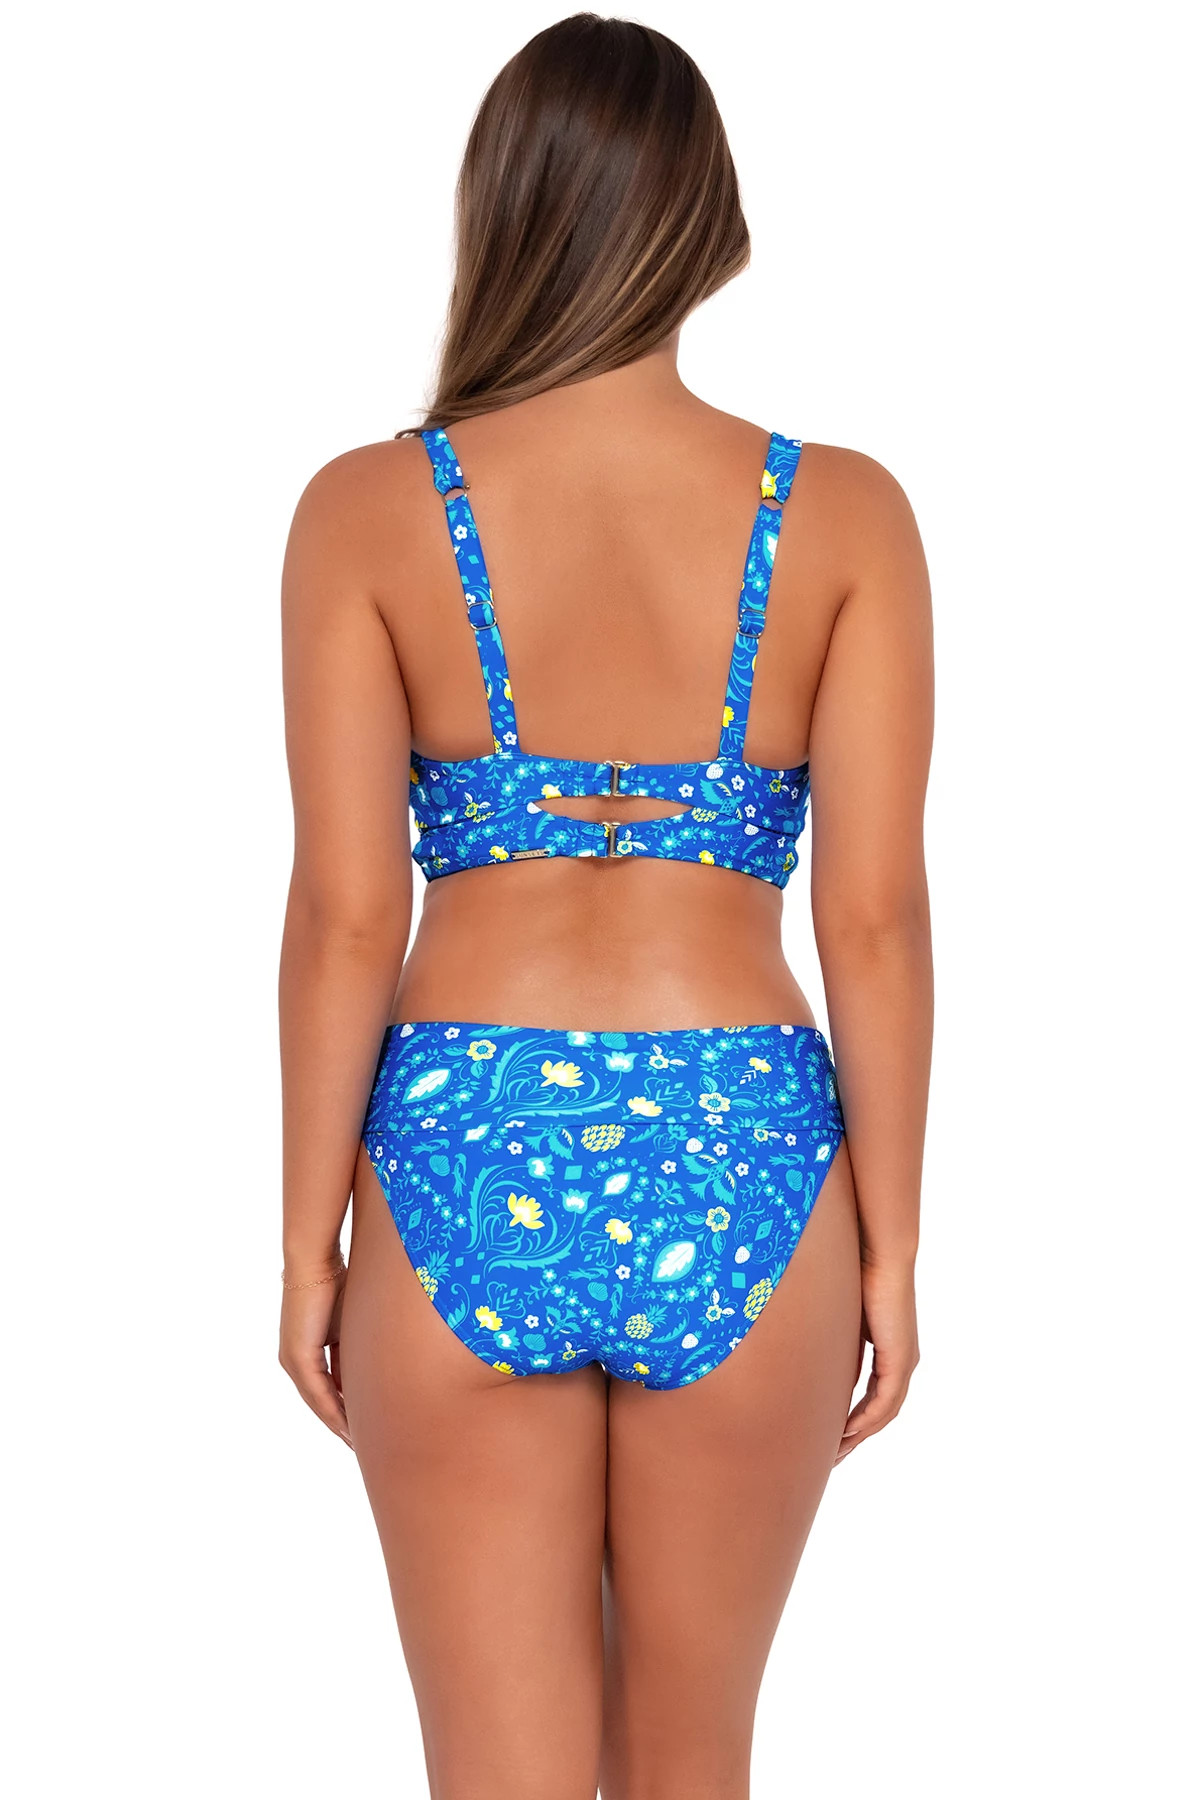 PINEAPPLE GROVE Danica Underwire Bikini Top (E-H Cup) image number 2